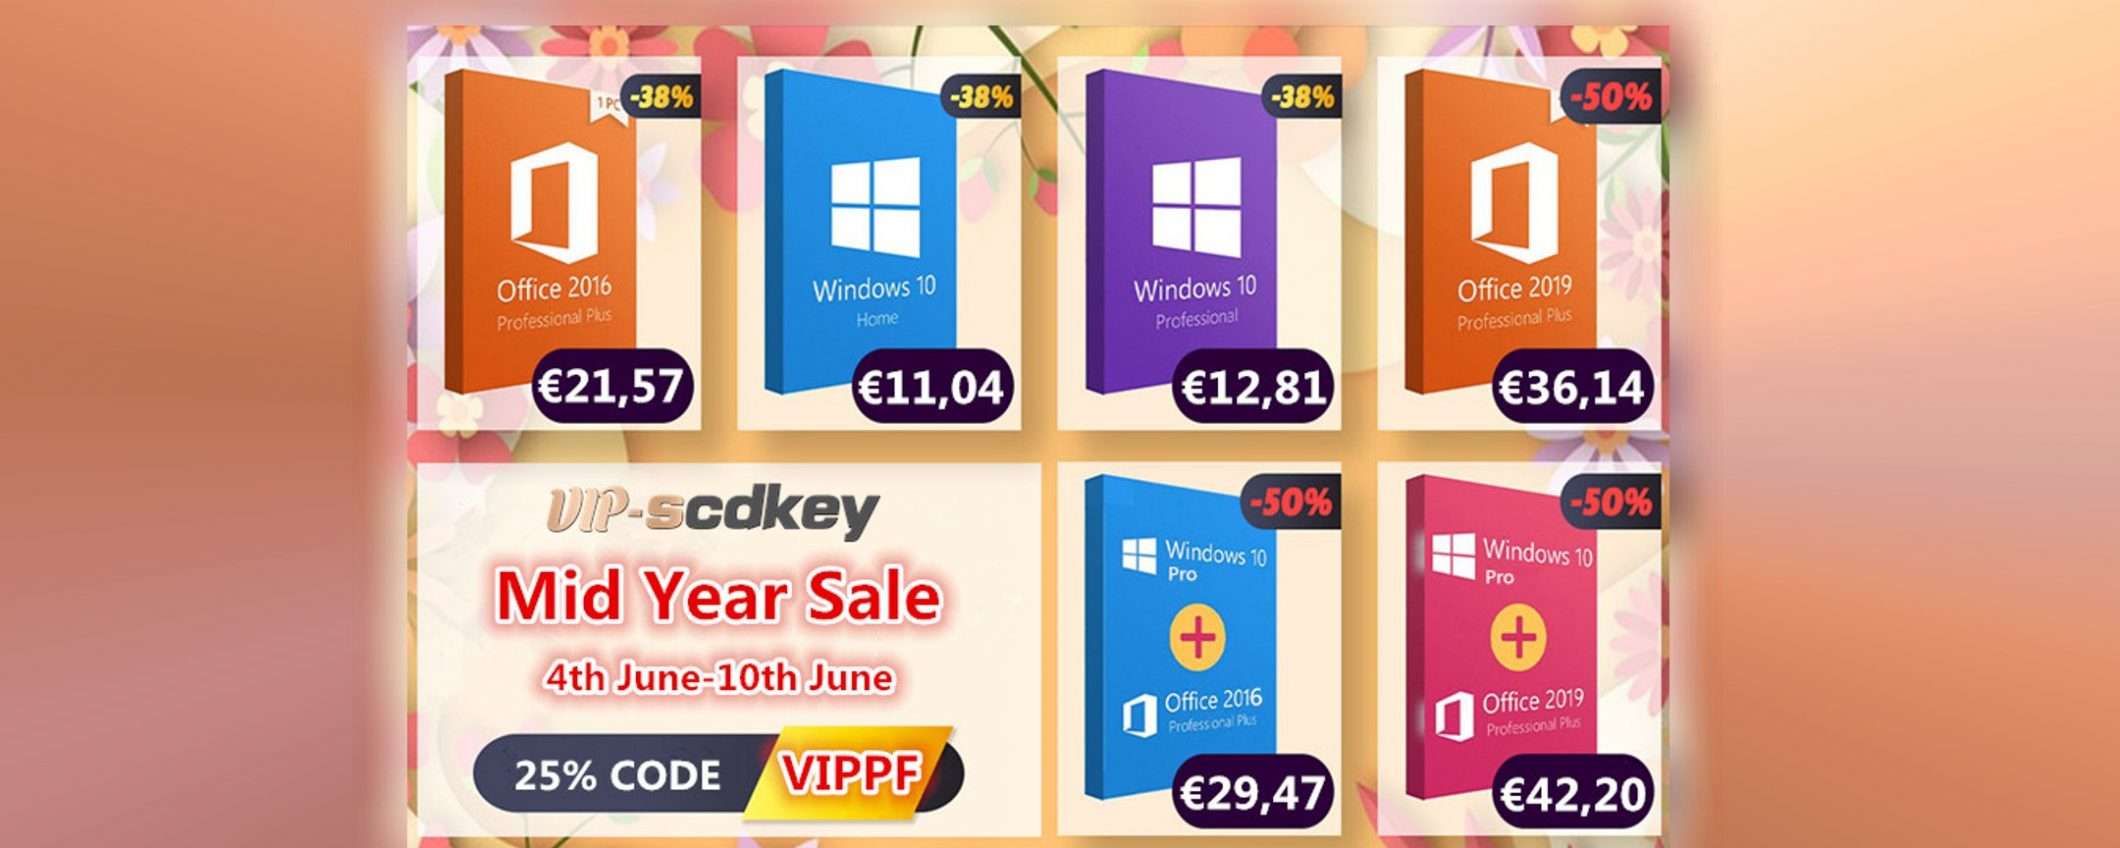 VIP-SCDkey promo: Windows 10 PRO OEM a soli 12 euro